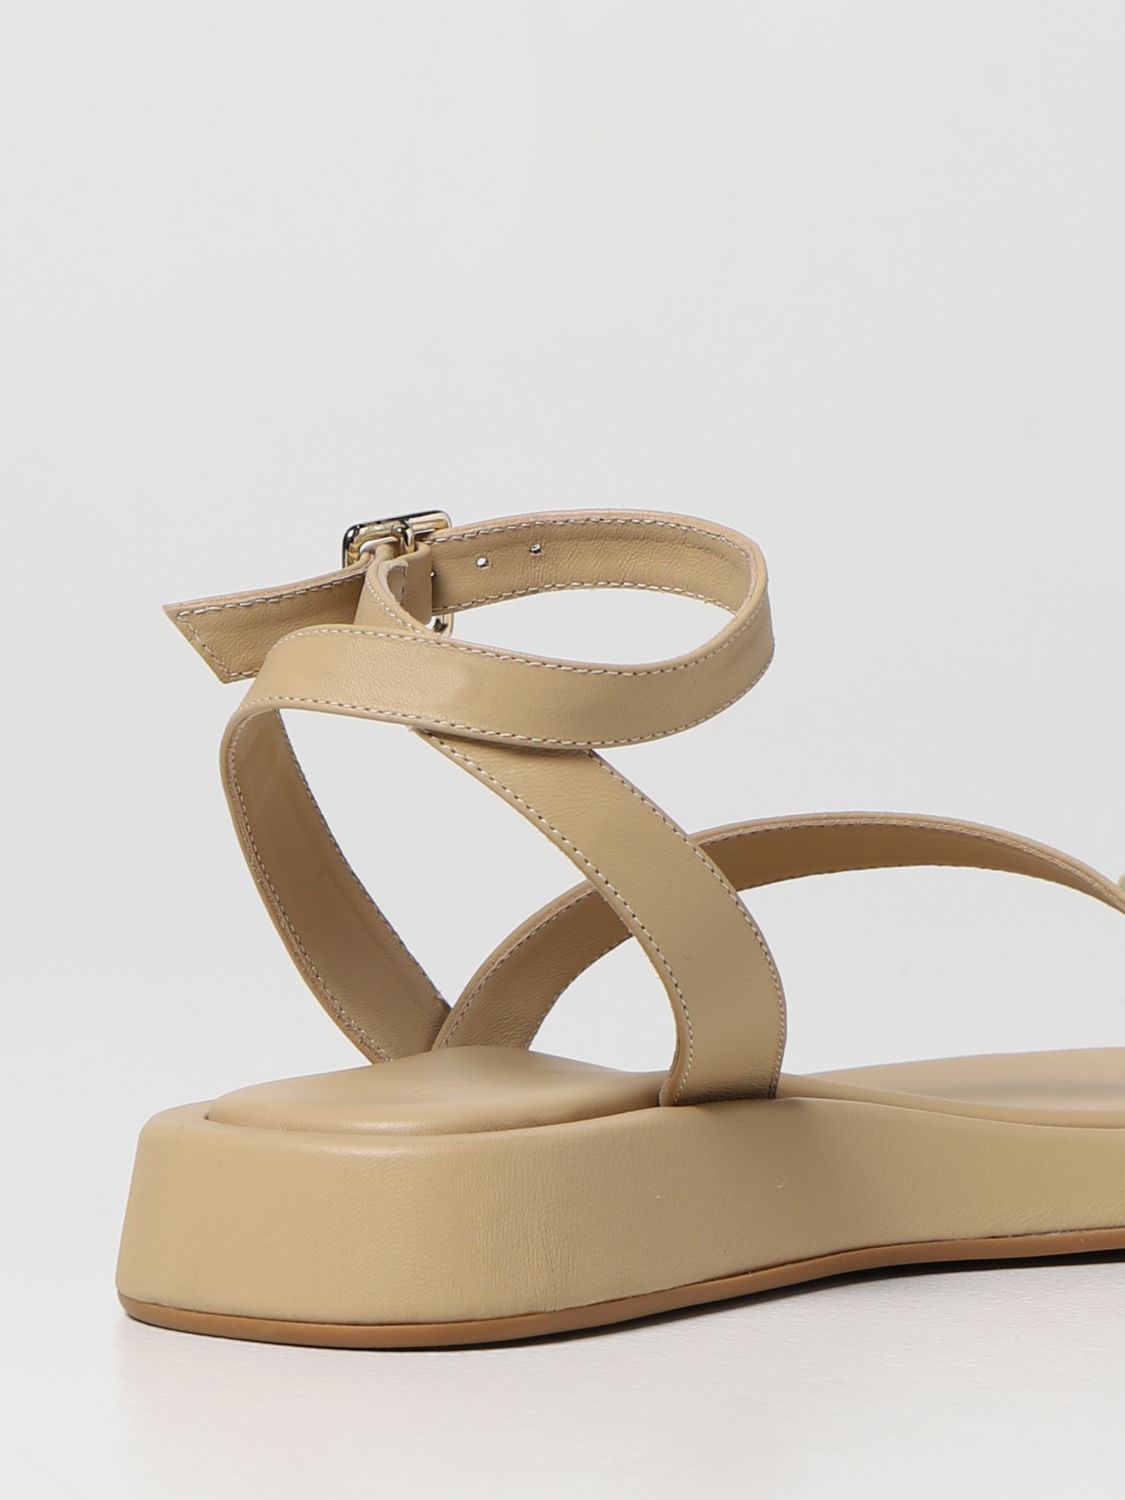 Gia Borghini Outlet: flat sandals for woman - Beige | Gia Borghini flat